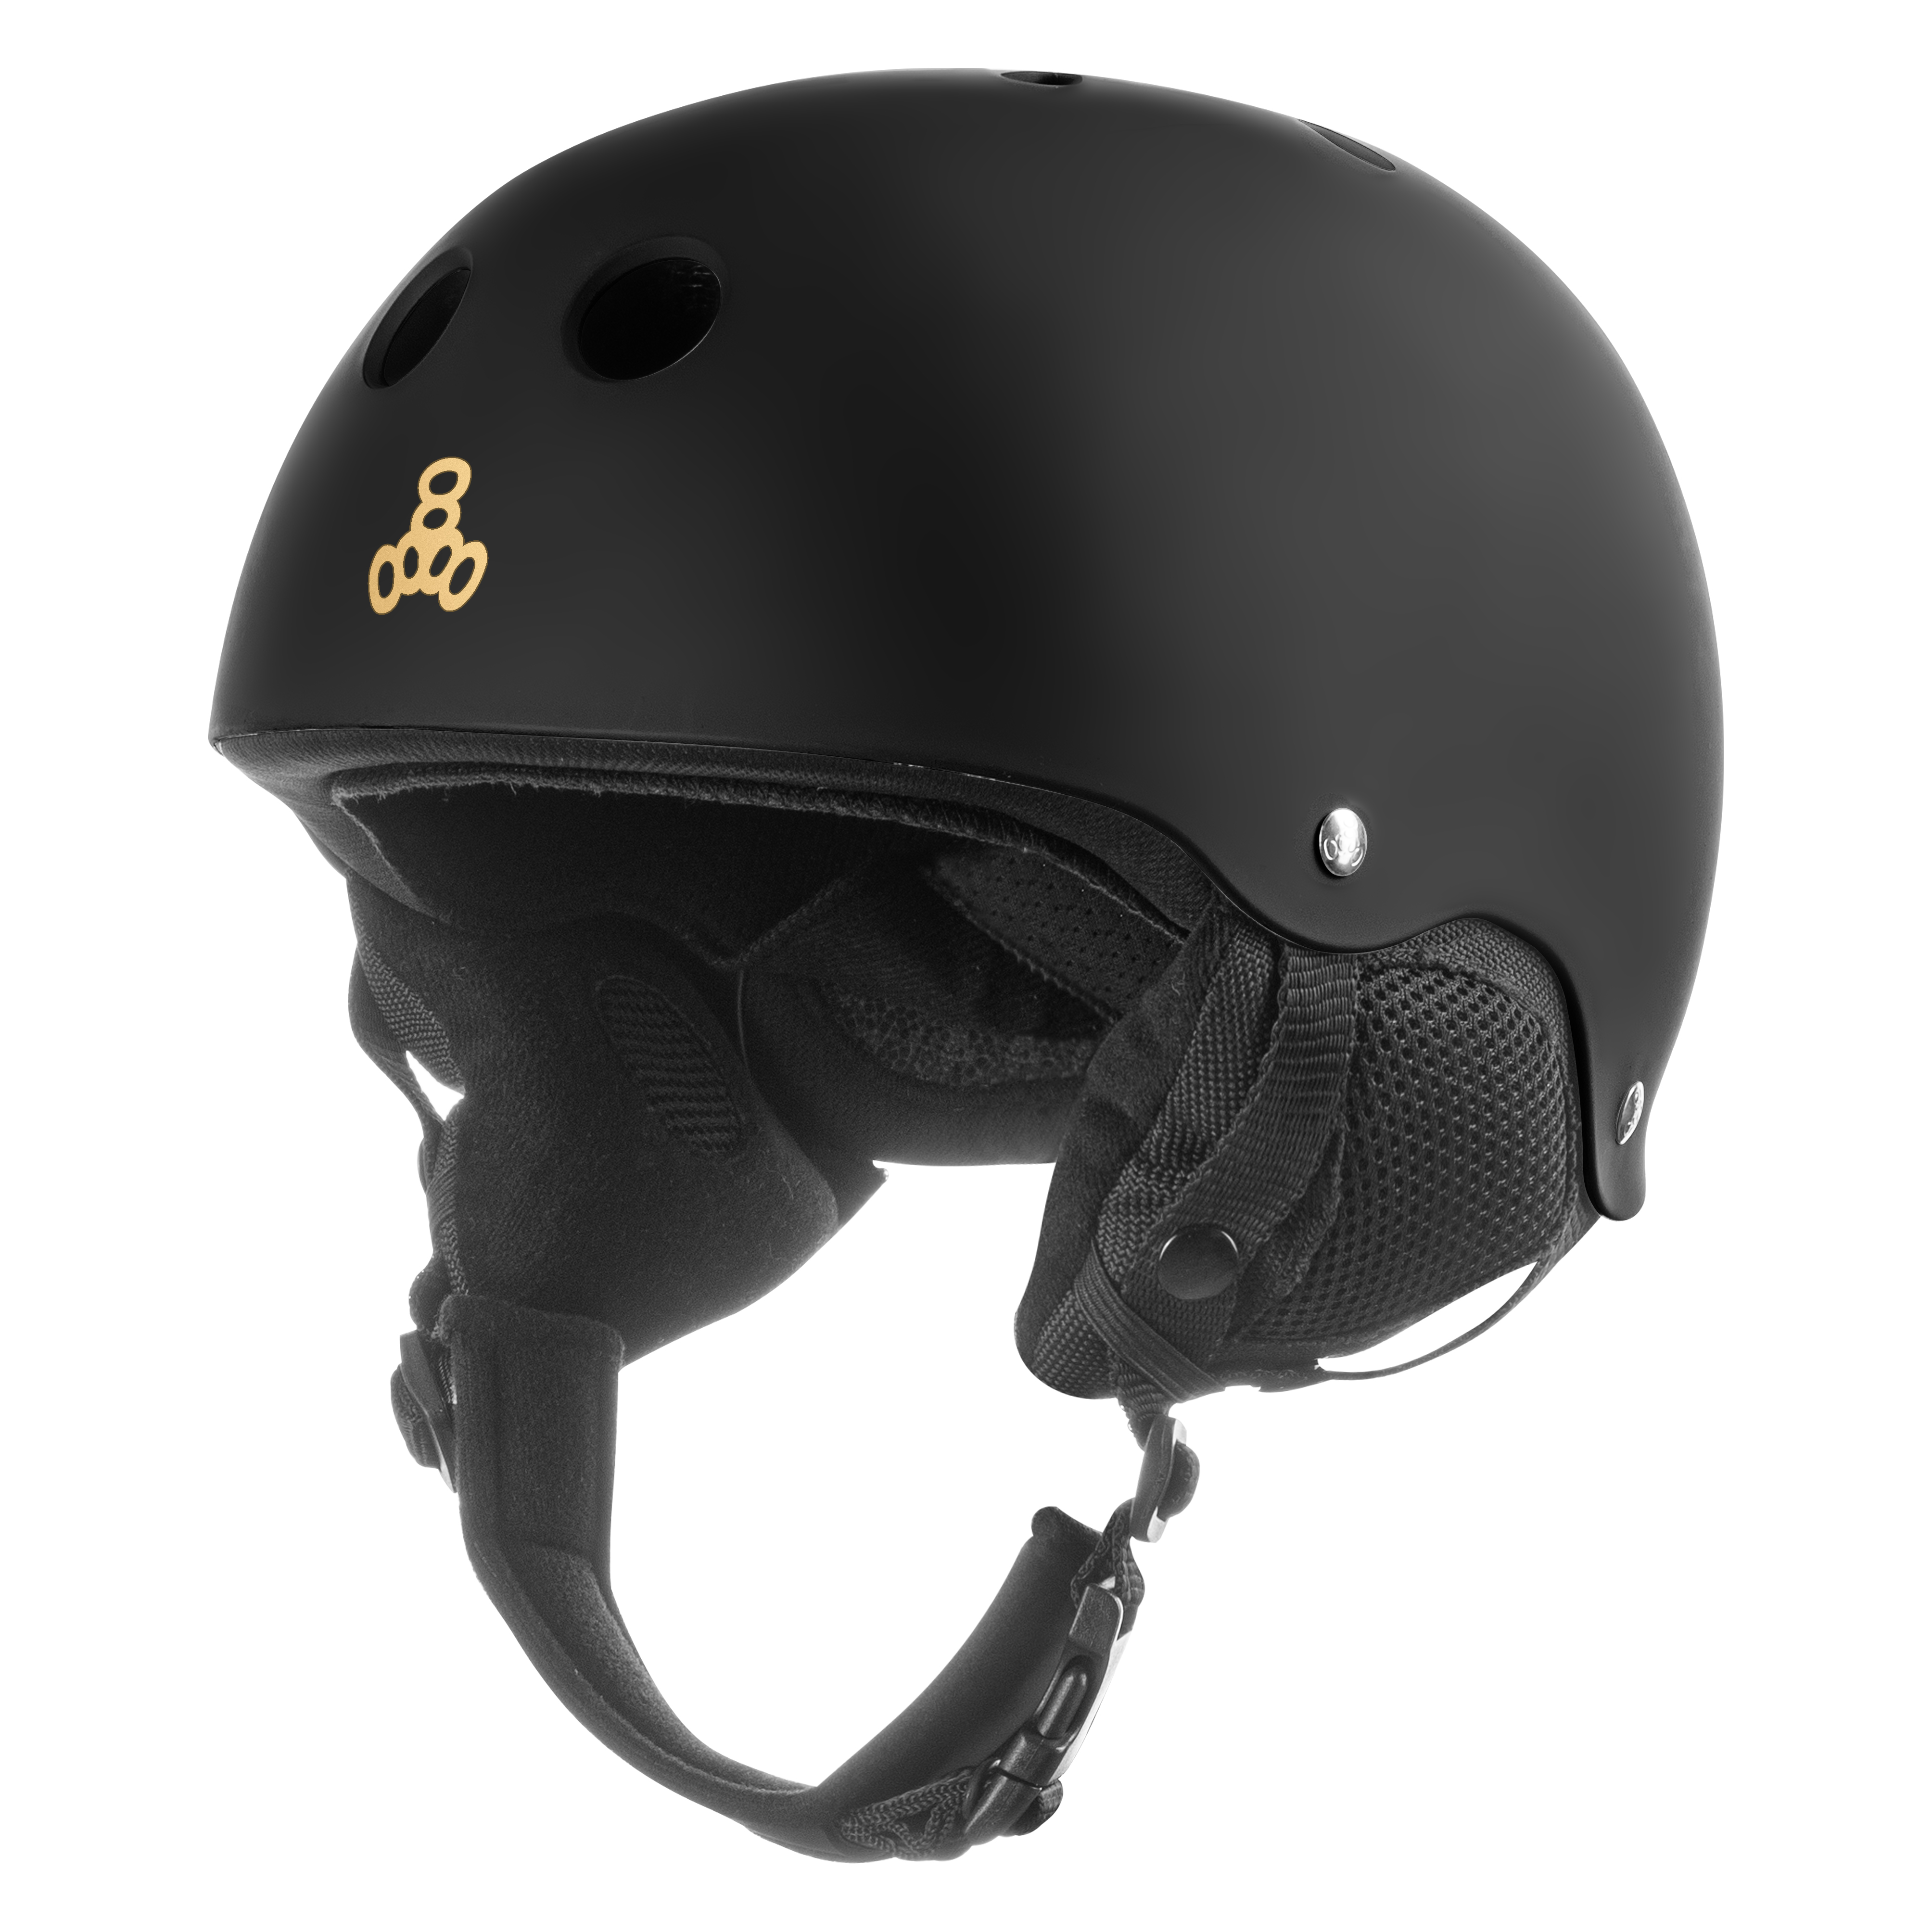 Мужской шлем для сноуборда Triple8 Old School Snow Black Rubber (XS)